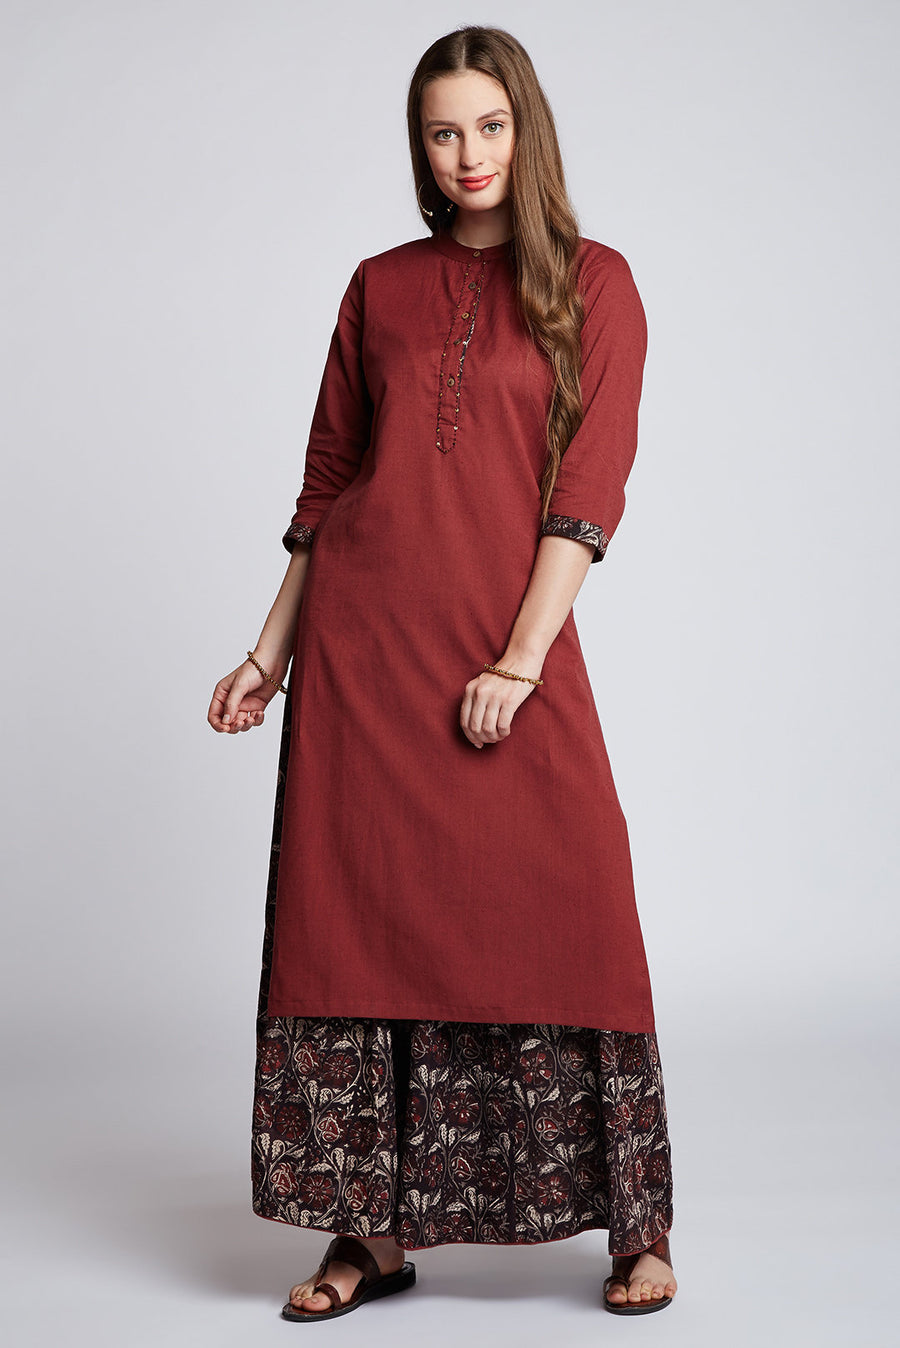 Hand block jahota printed skirt with long plain cotton kurta with kantha hand embroidery